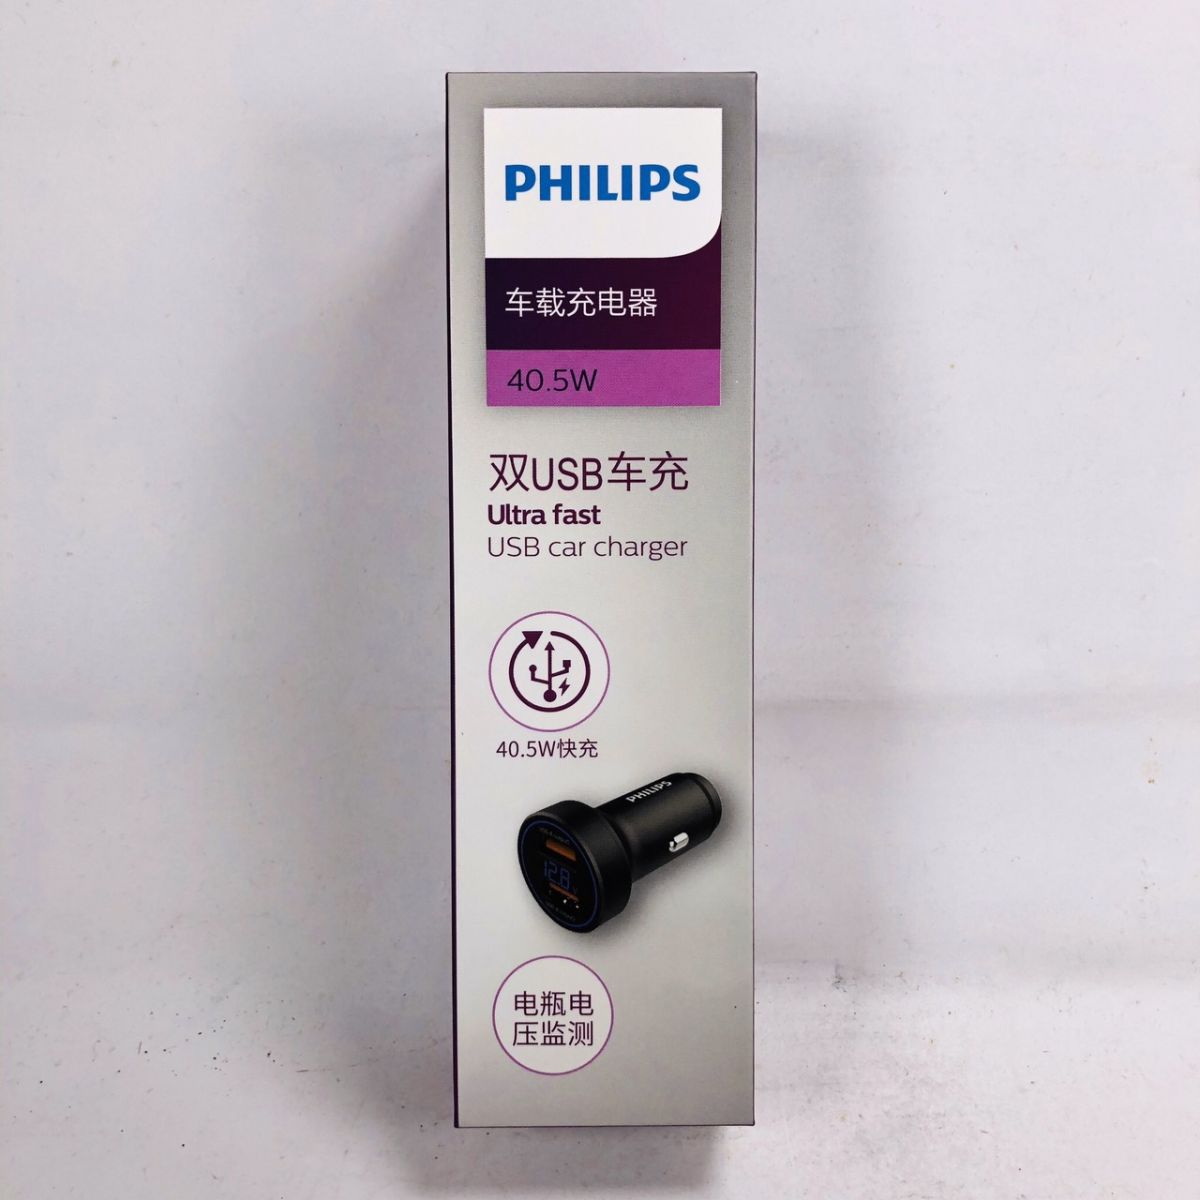 Philips Dlp3530n 車載充電器雙usb車充40 5w快充有電瓶電壓監測 機油倉庫商務平台